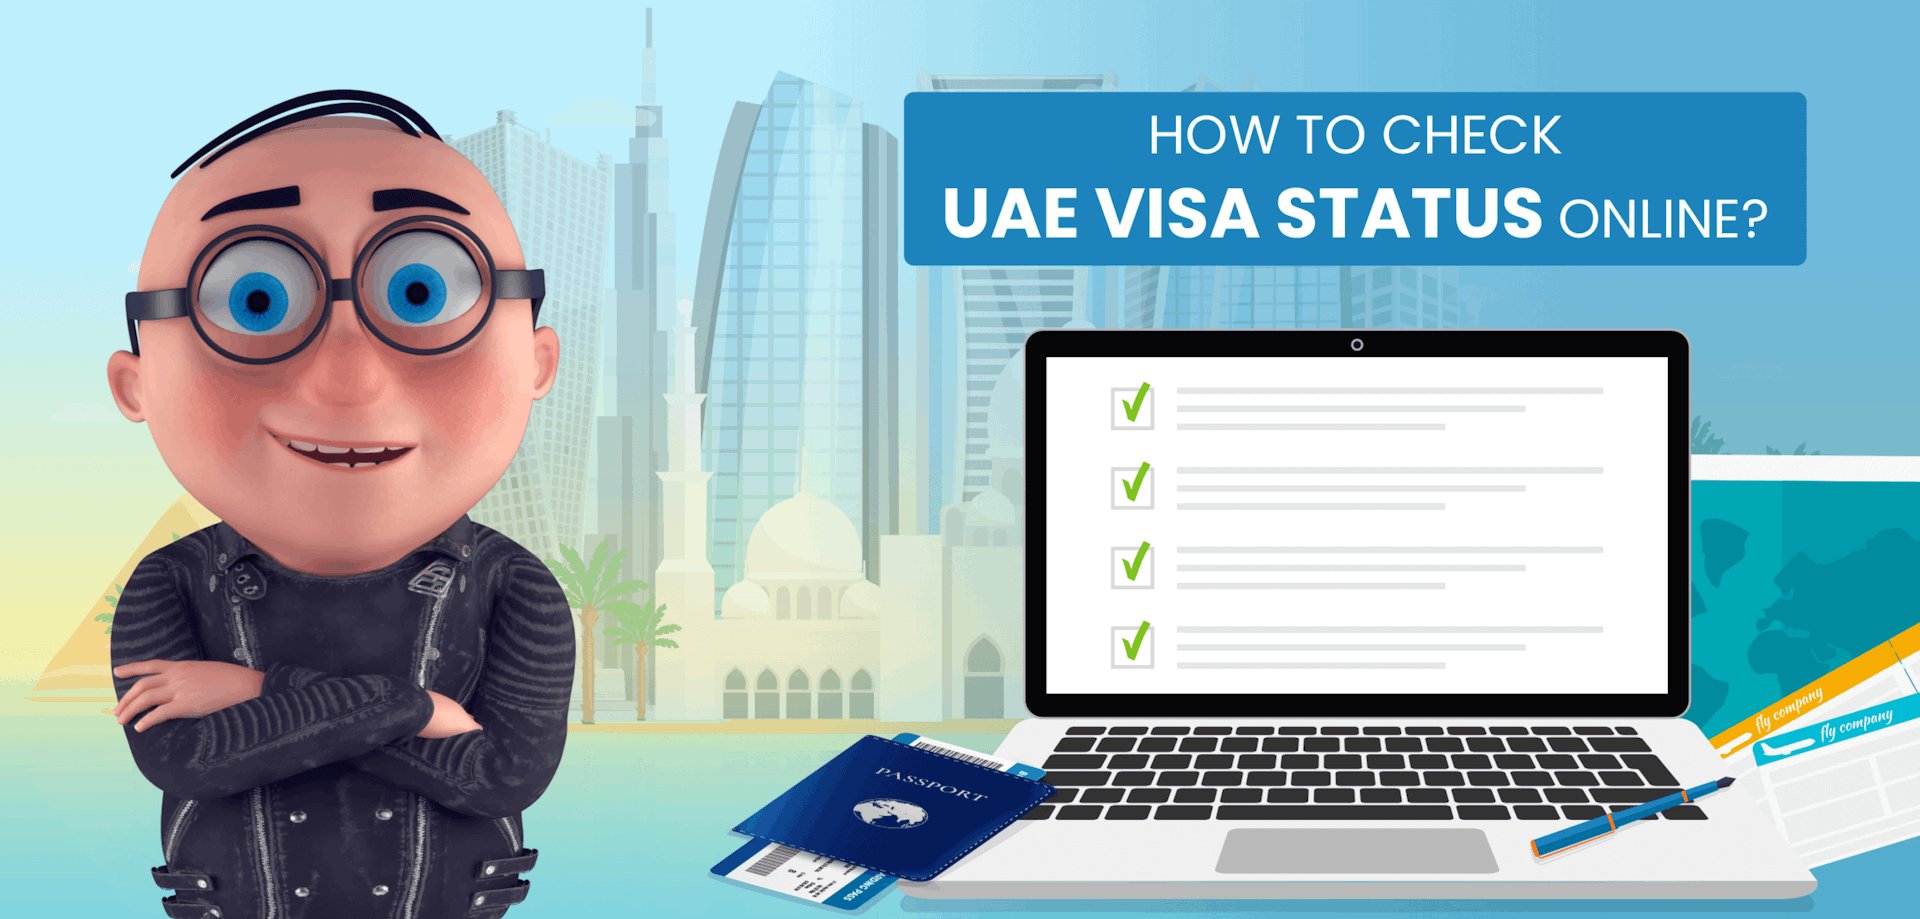 Easy Steps To Check Visa Status